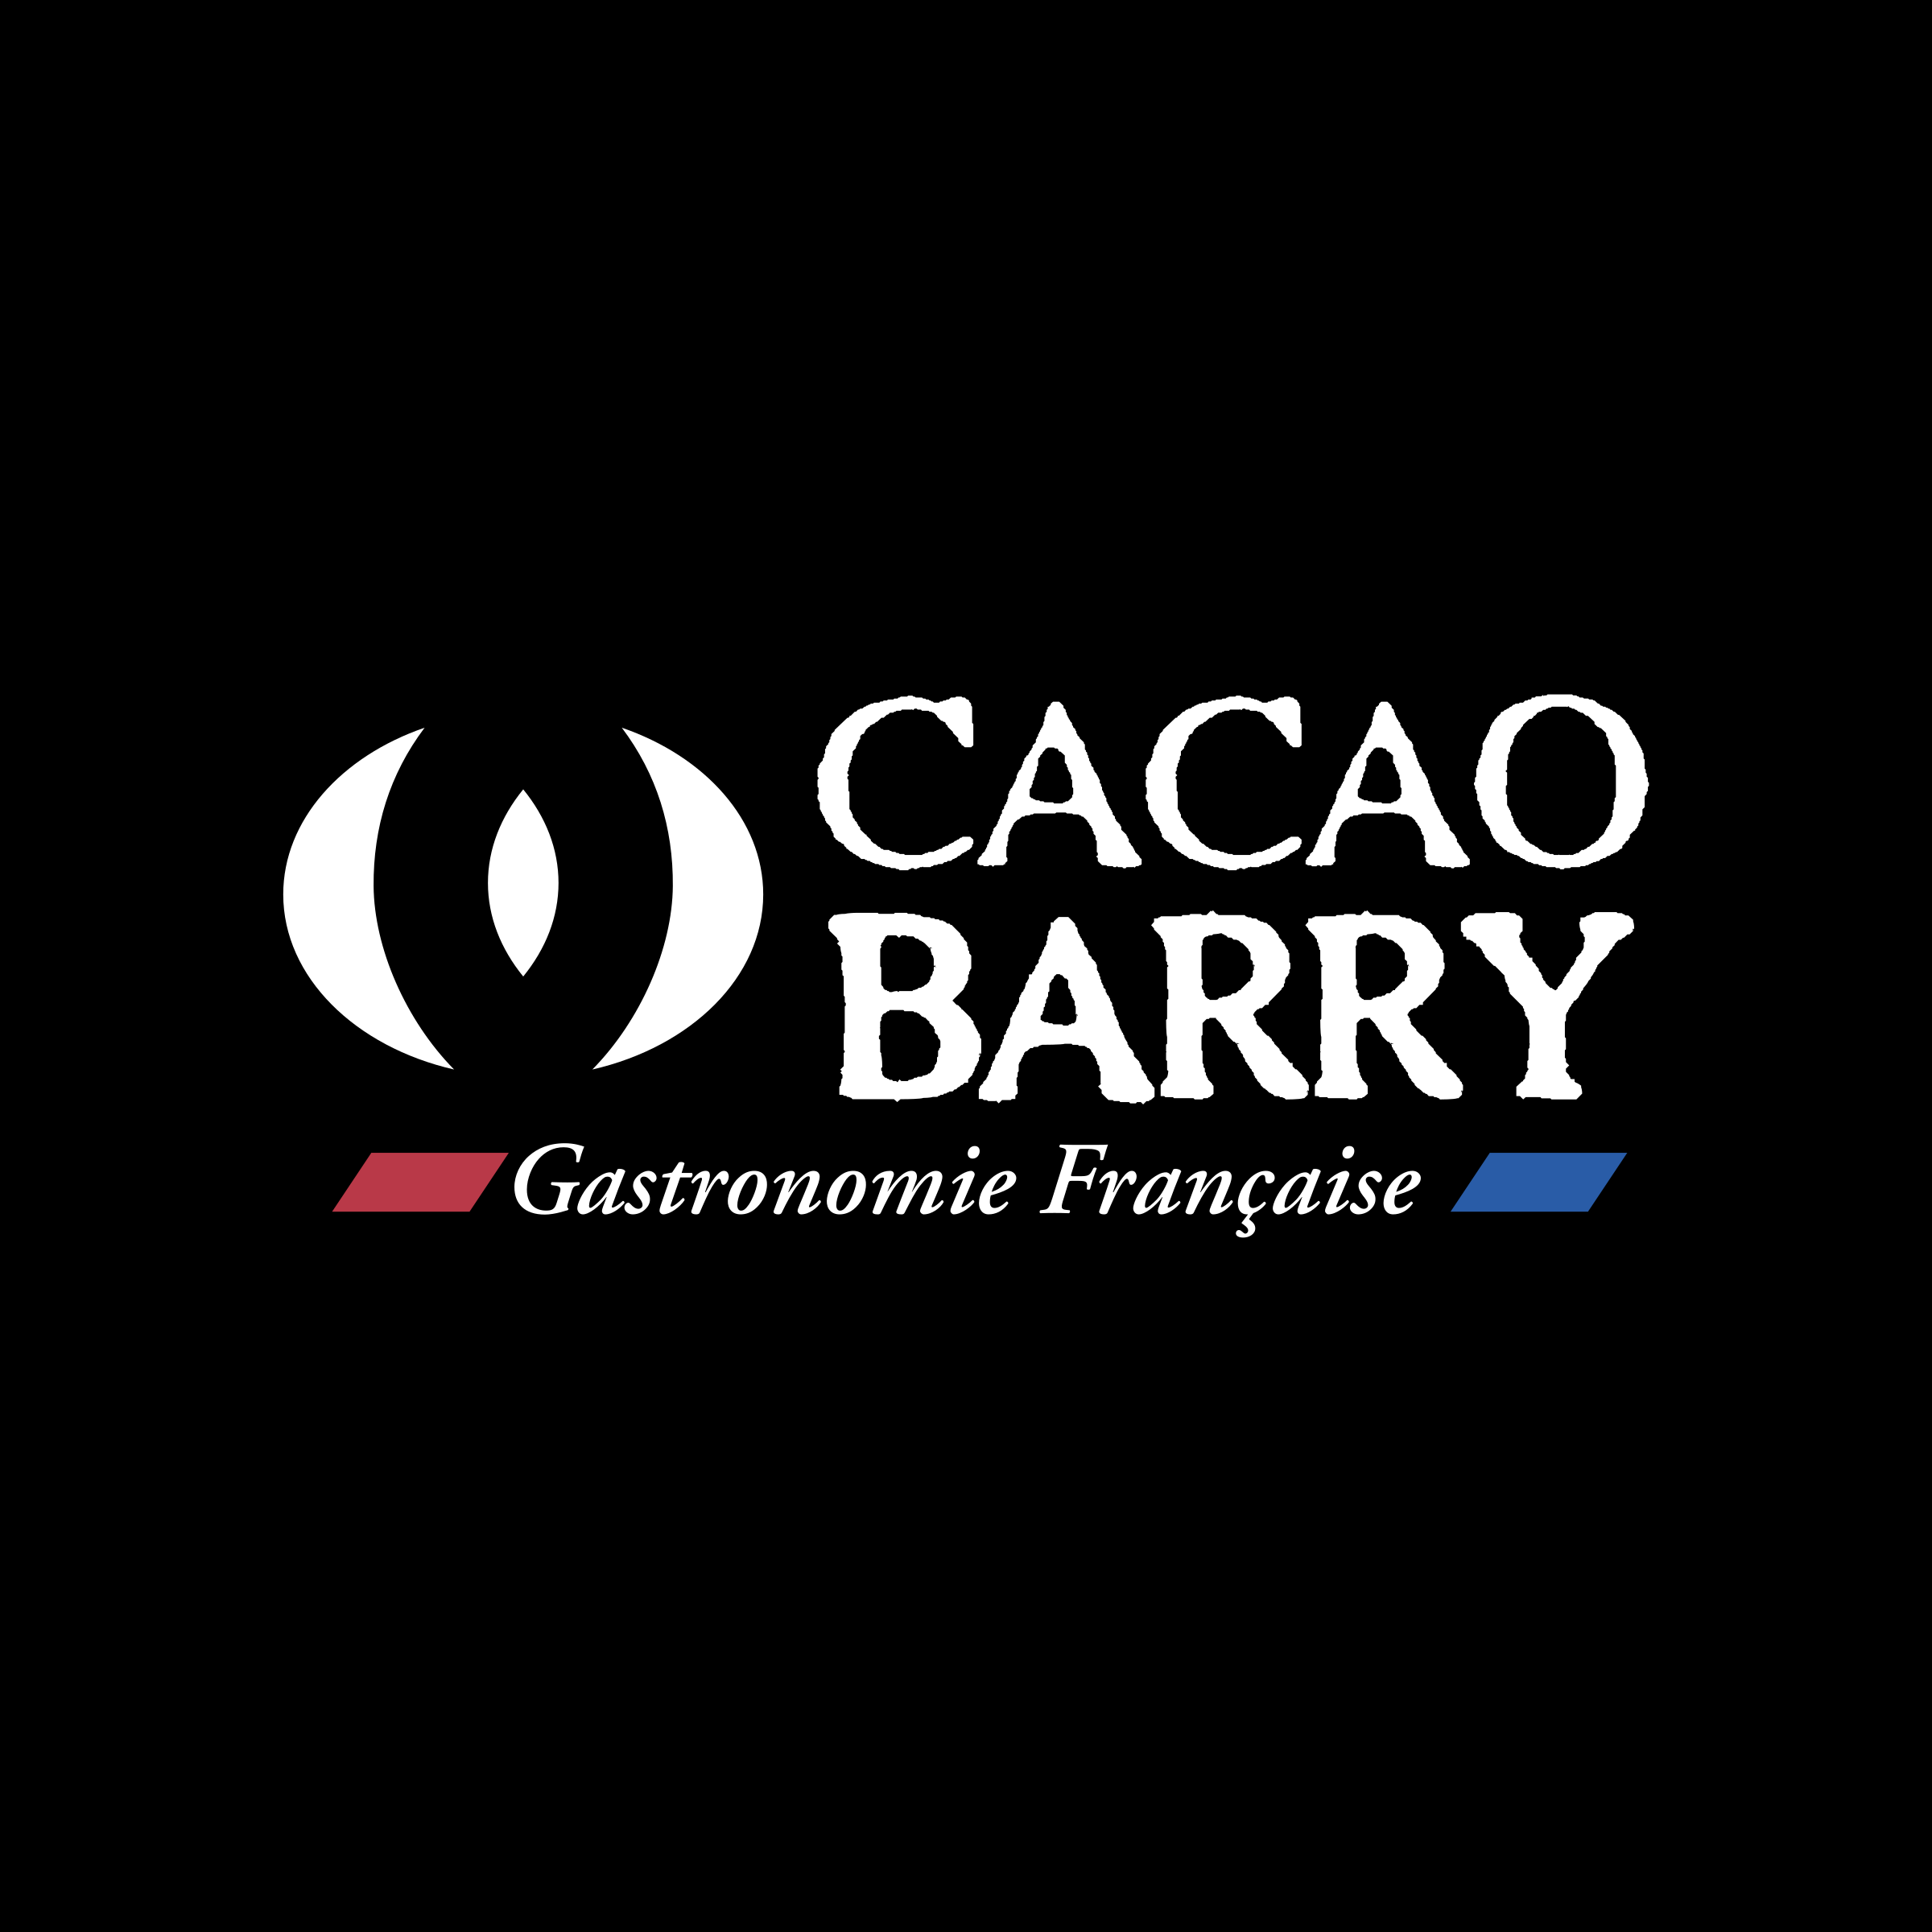 Barry Logo - Cacao Barry Logo PNG Transparent & SVG Vector - Freebie Supply